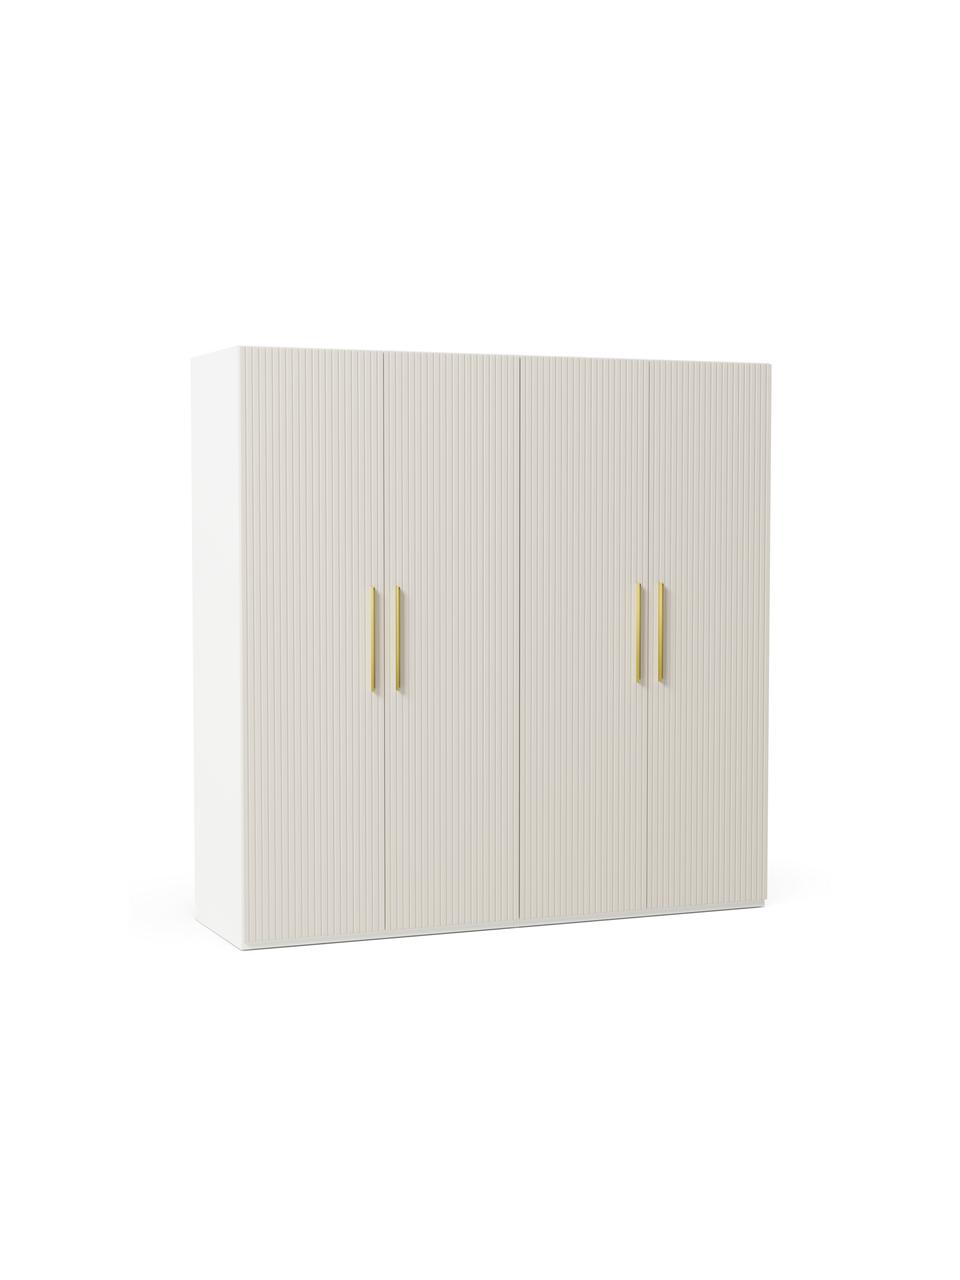 Modulární skříň s otočnými dveřmi Simone, šířka 200 cm, více variant, Dřevo, béžová, Interiér Classic, výška 236 cm